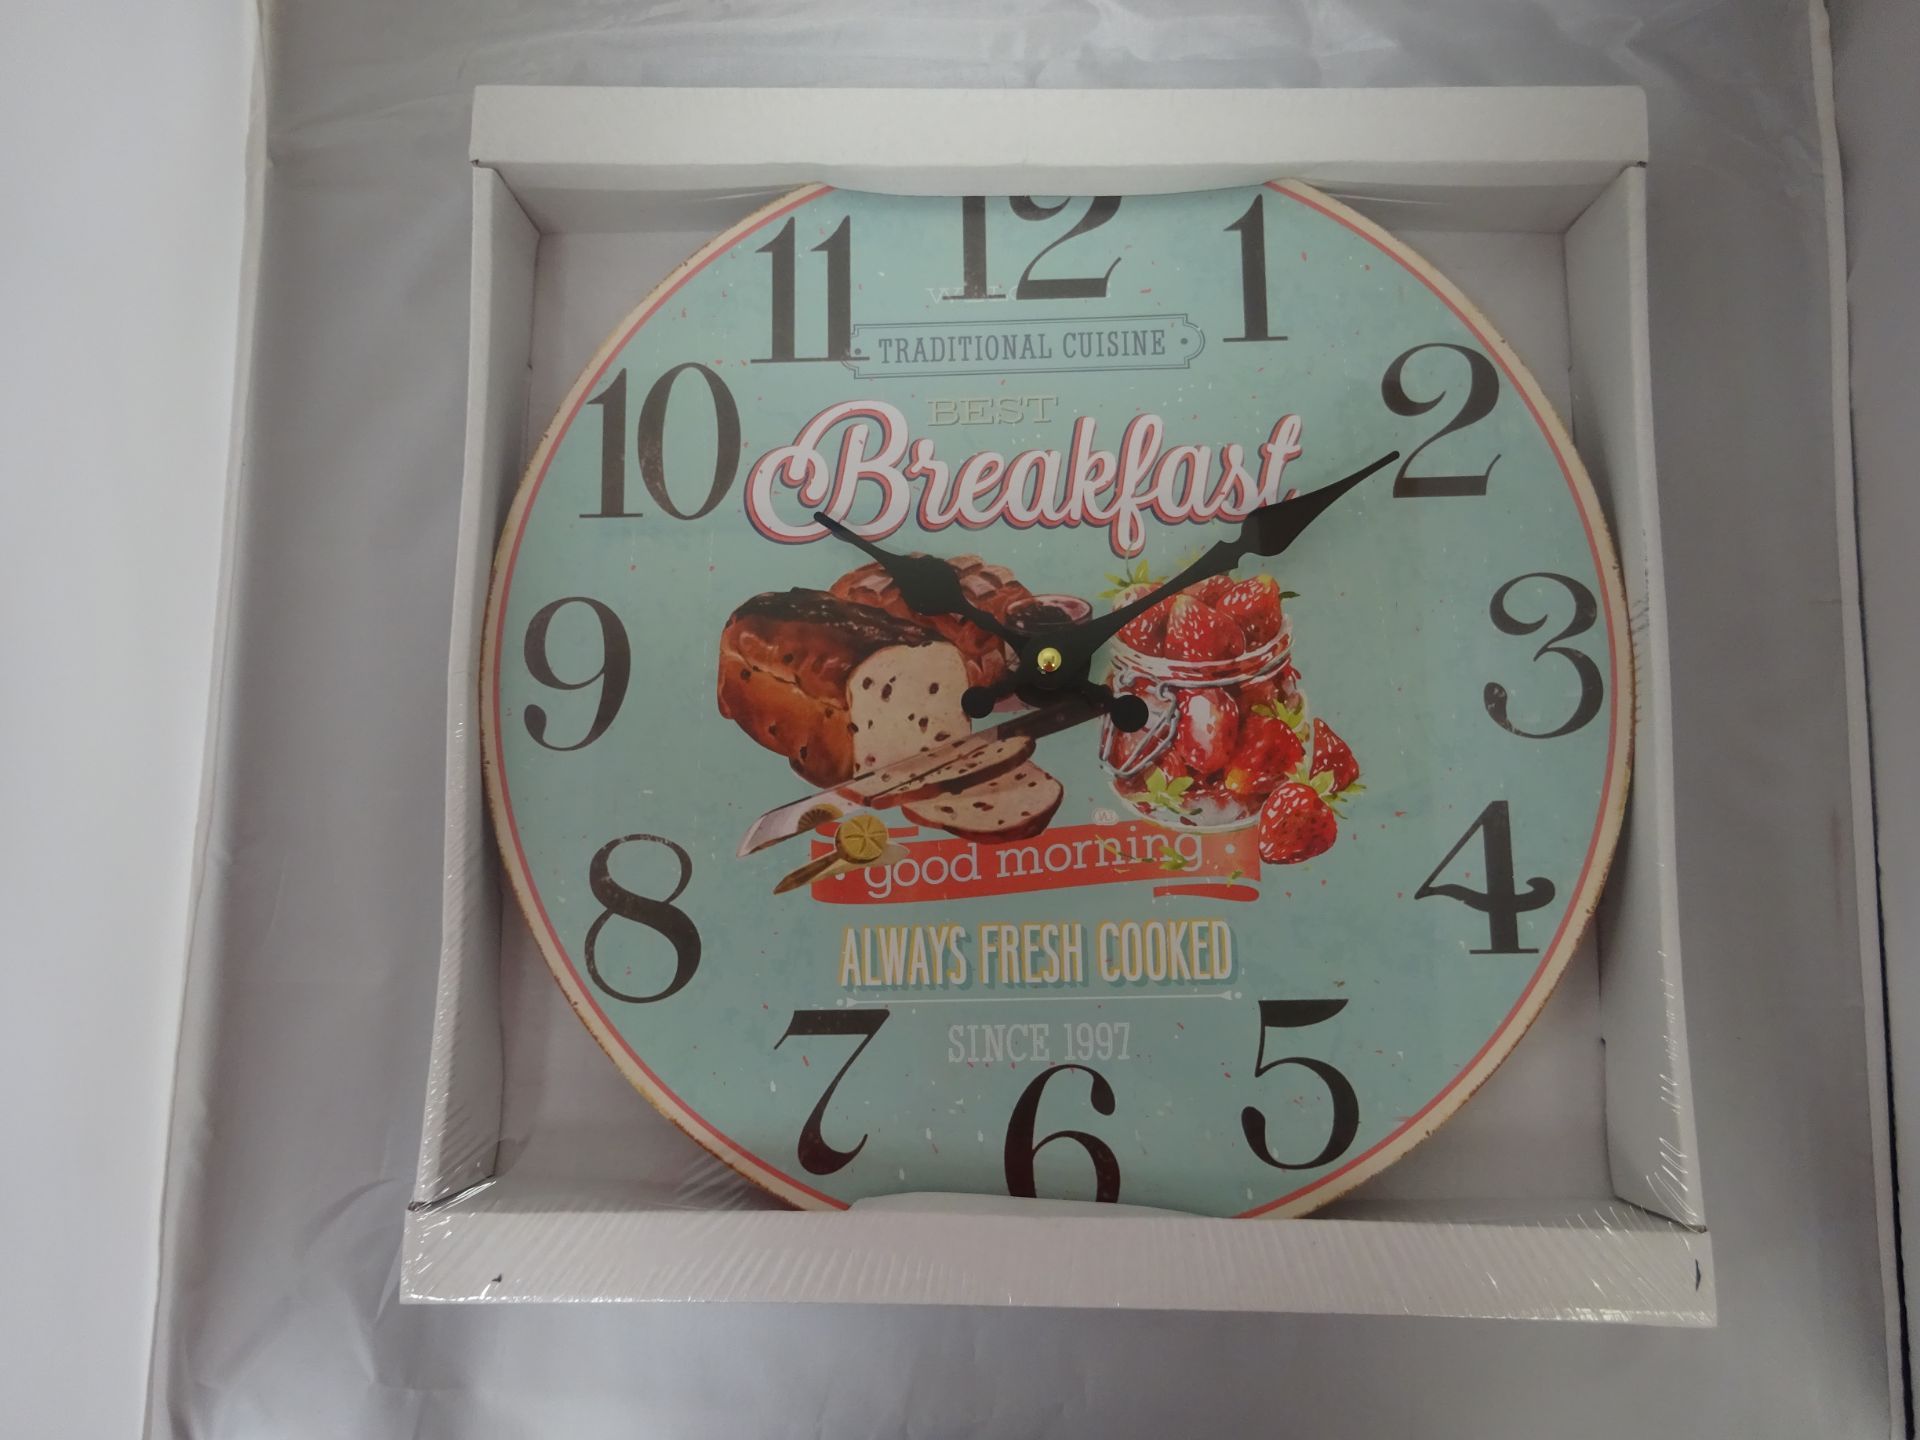 New Blue Breakfast Wall Clock in Original Packaging - Image 2 of 2